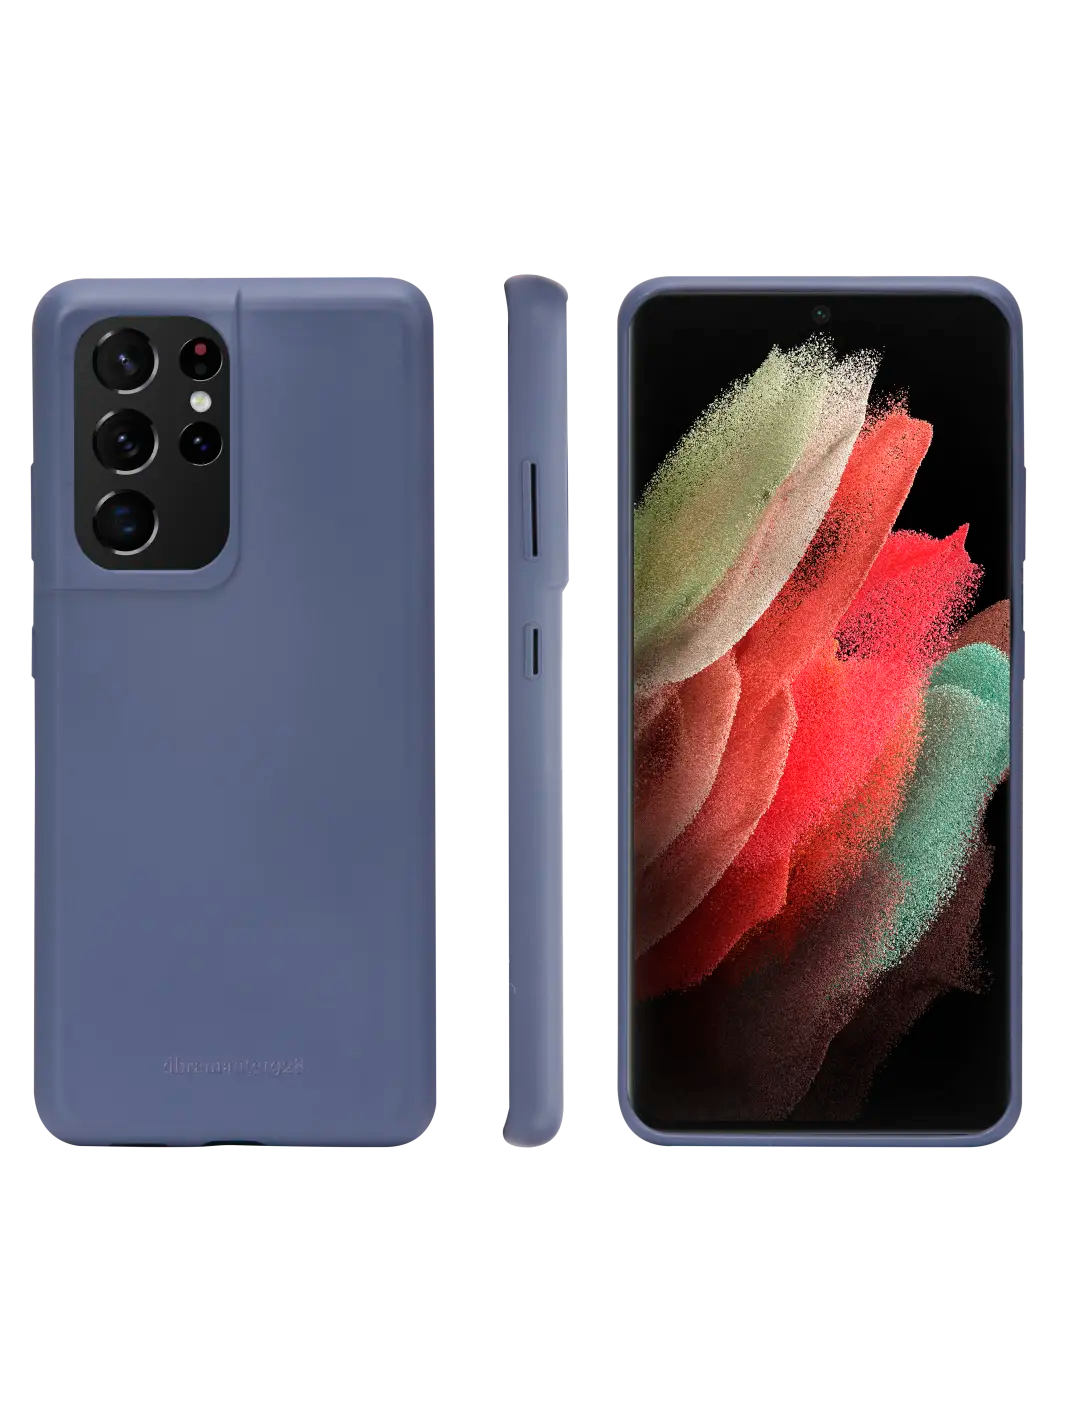 Bornholm Ocean Blue Galaxy S21 Ultra Phone Cases